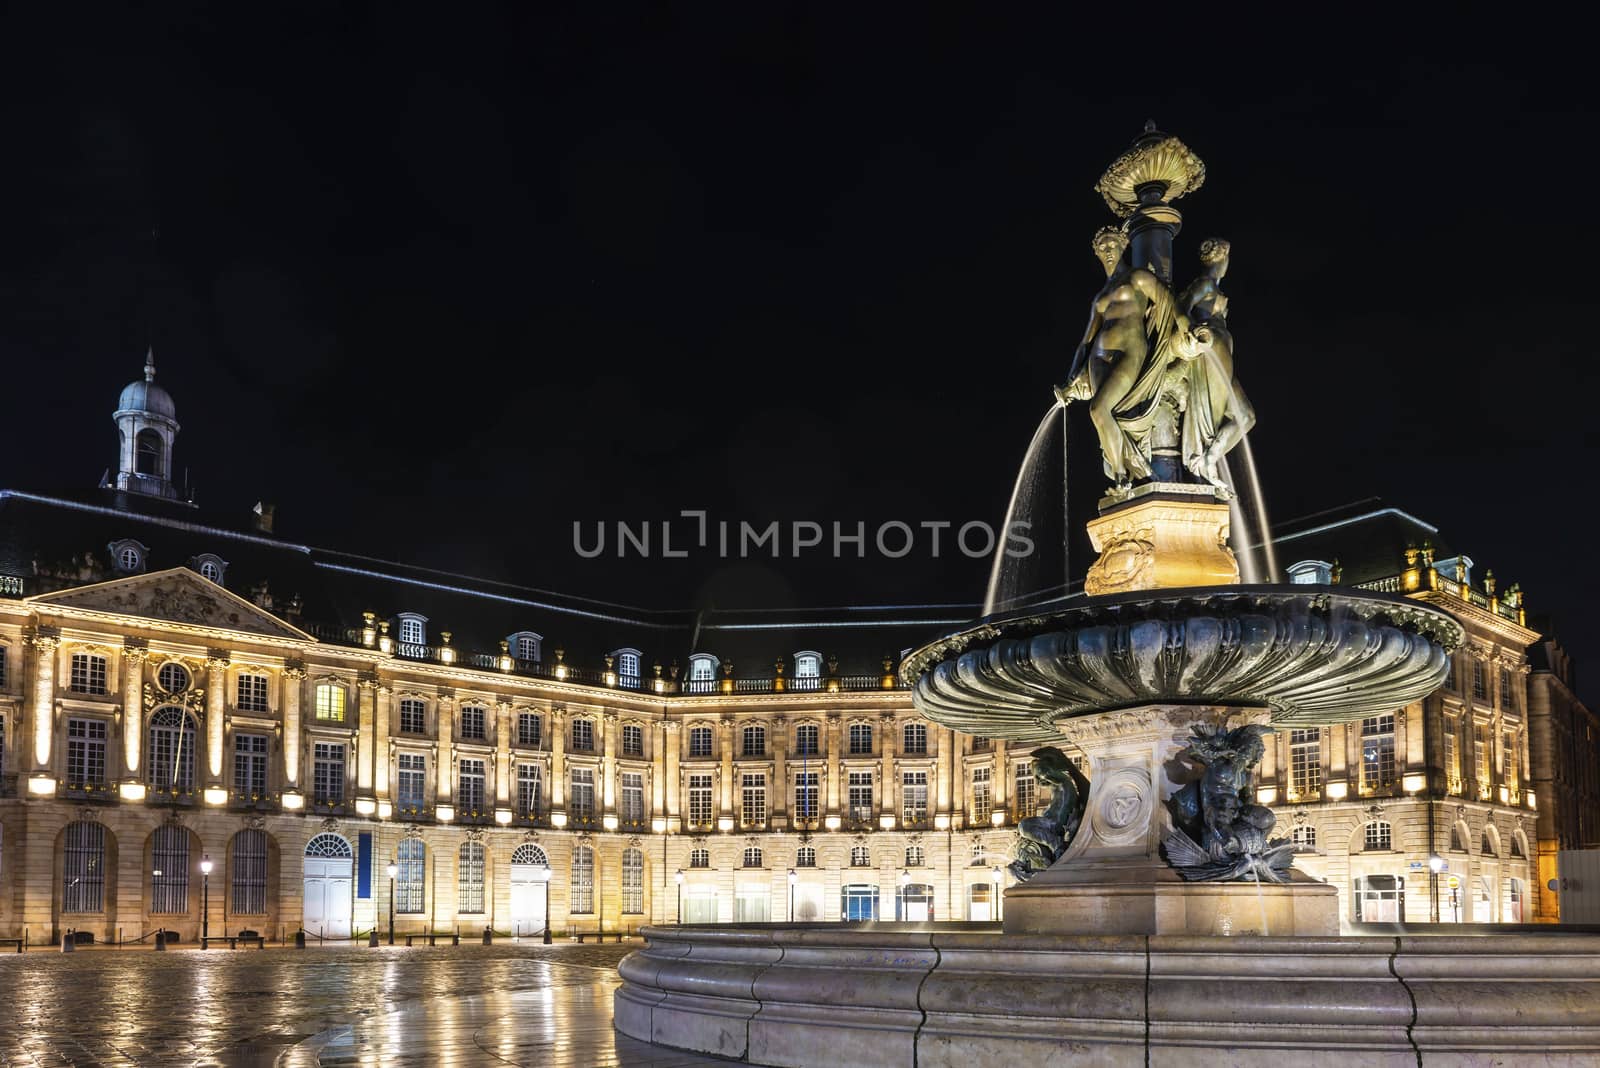 Place de la Bourse in Bordeaux is a magnificent architectural ensemble of classic French style, inspired by Place Vendôme in Paris.